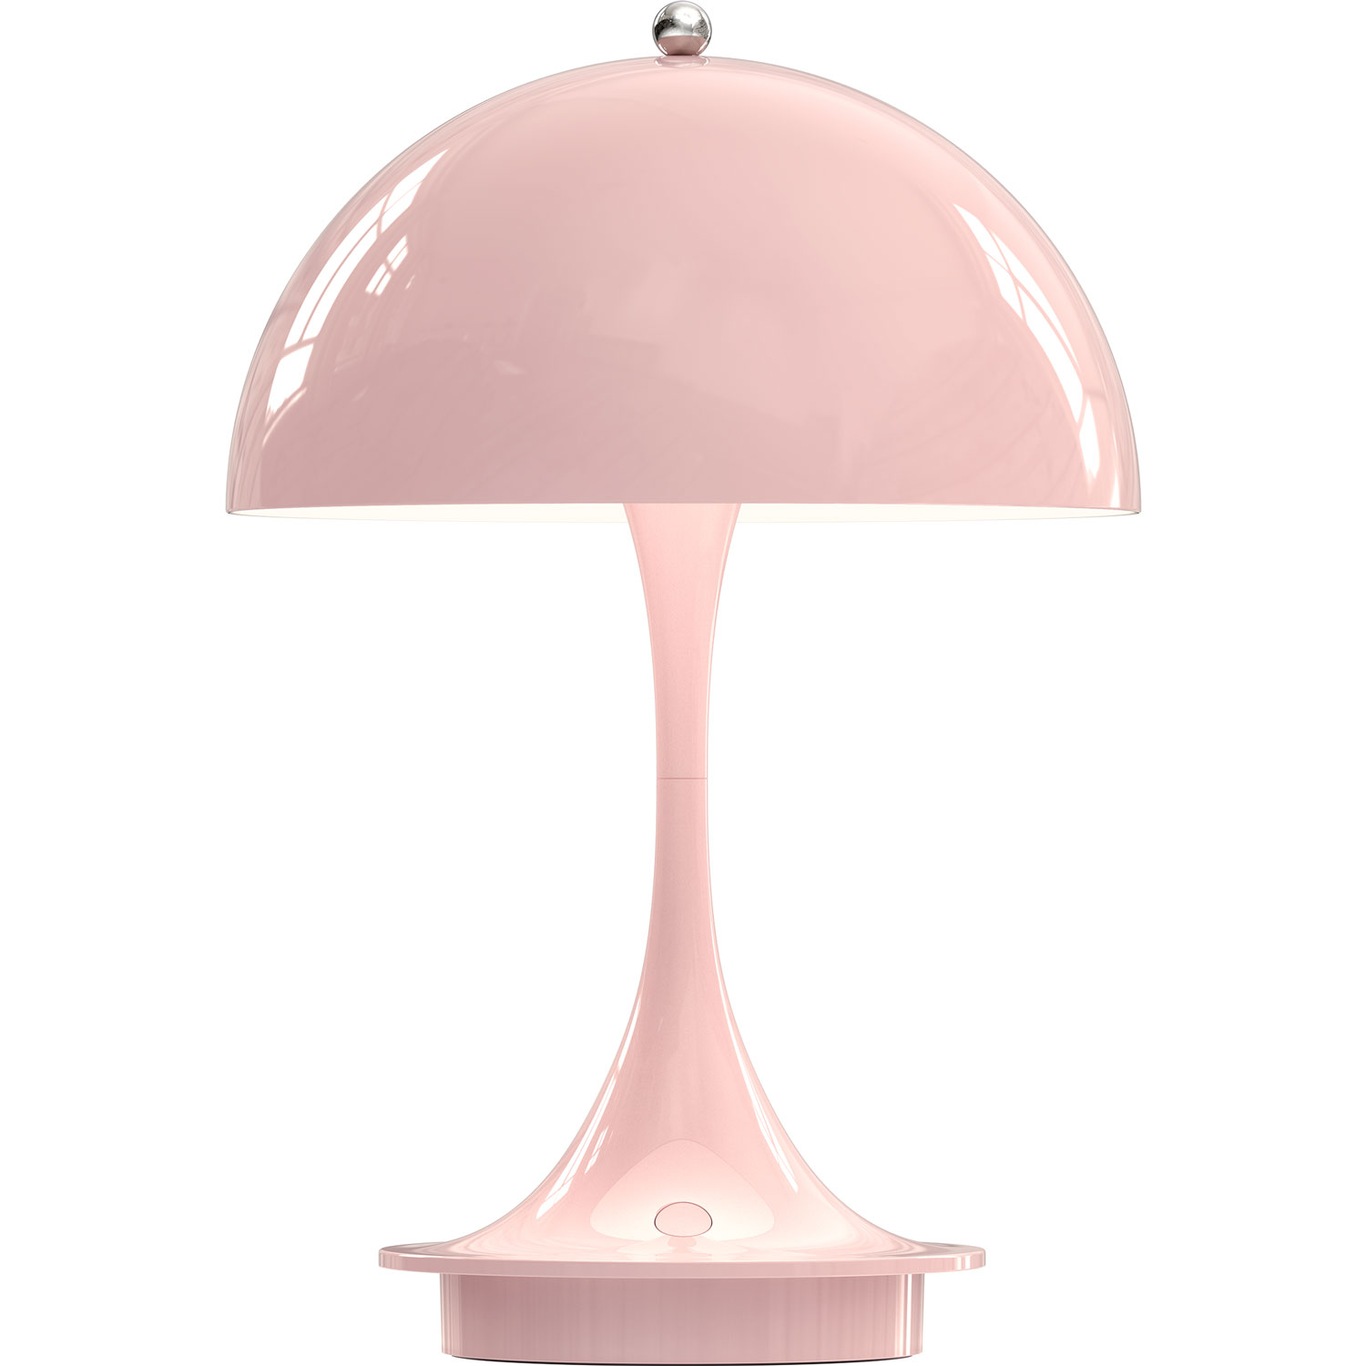 Panthella 160 Table Lamp Portable, Light Pink